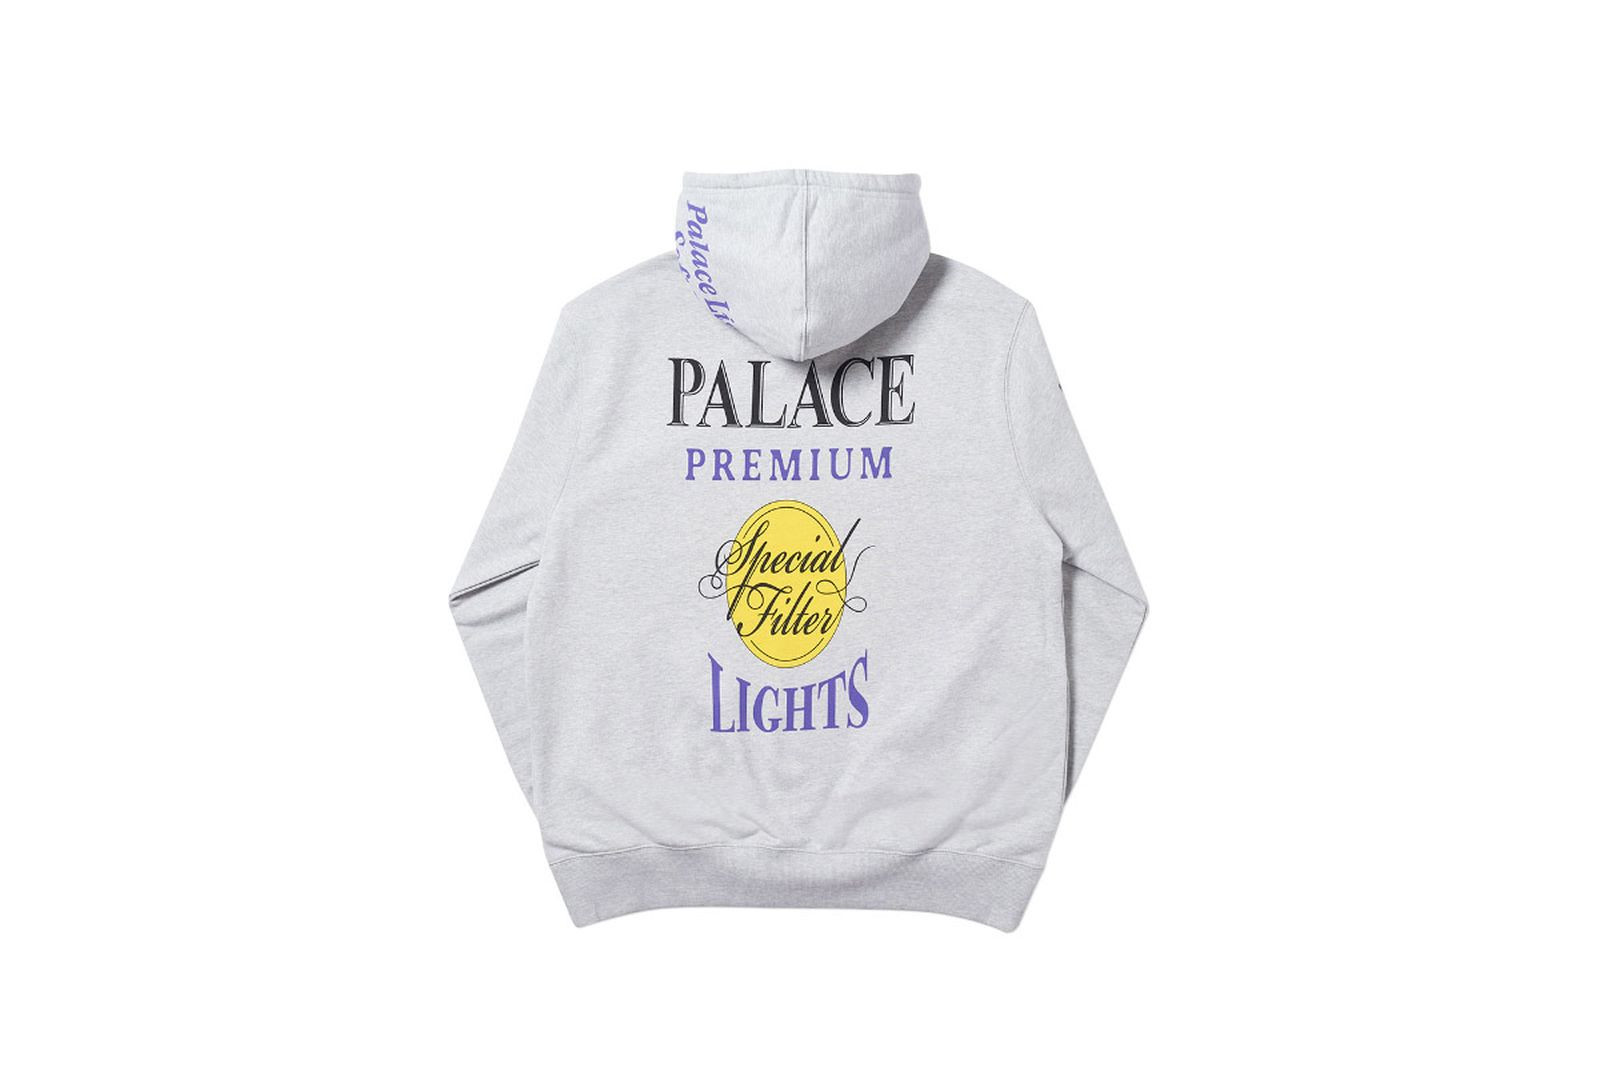 Palace 2019 Autumn Hood Blender grey back